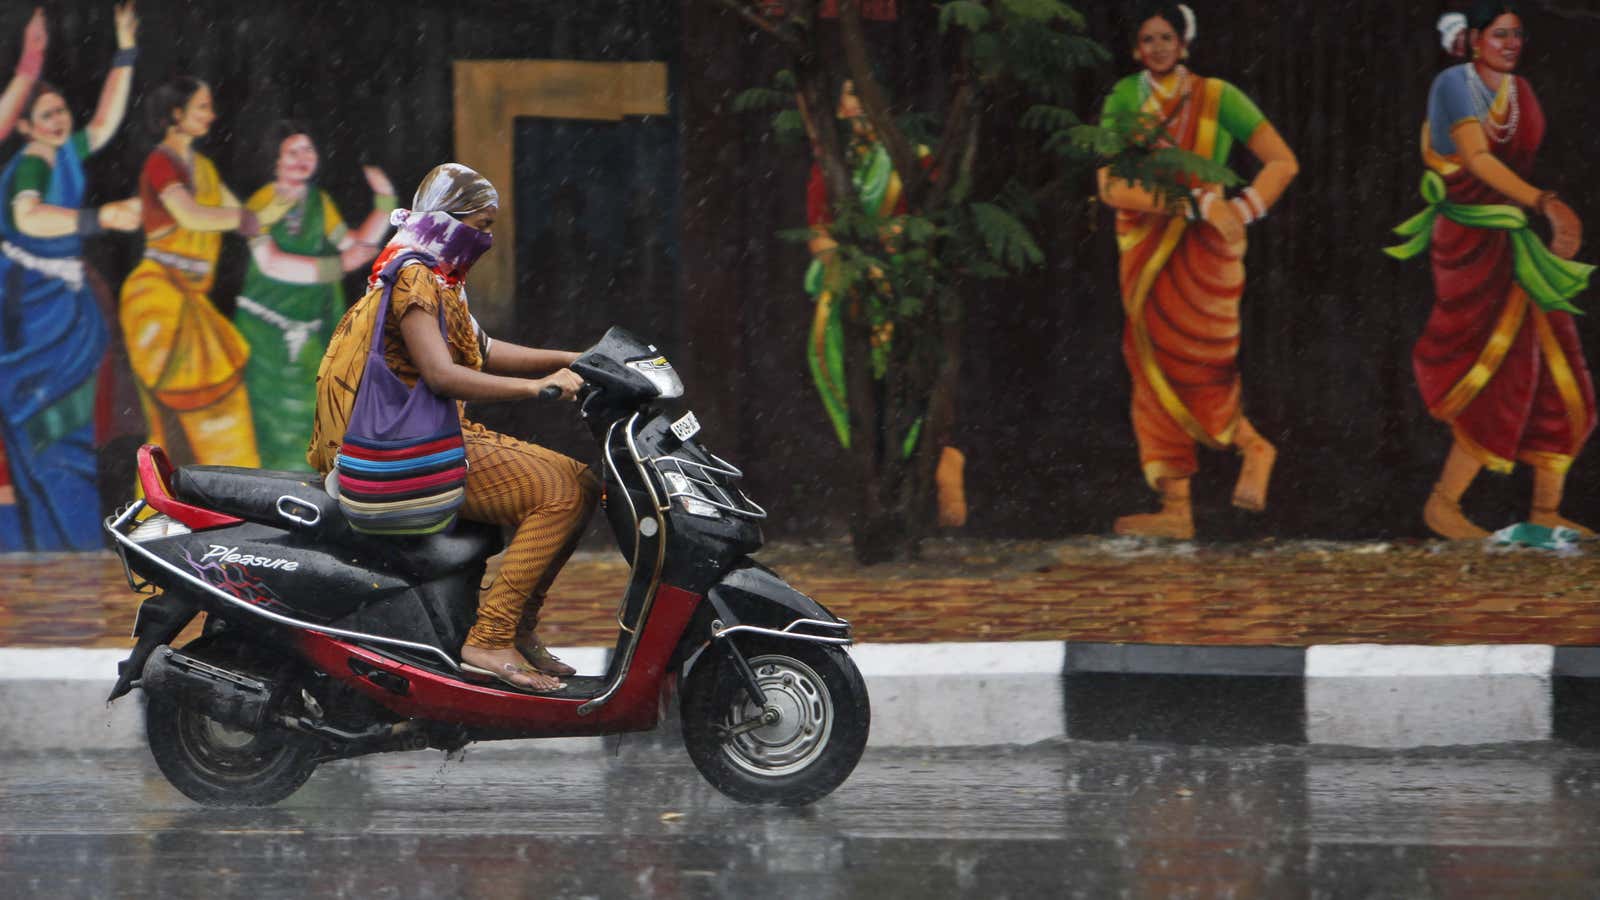 Zipping through the rain in Hyderabad.